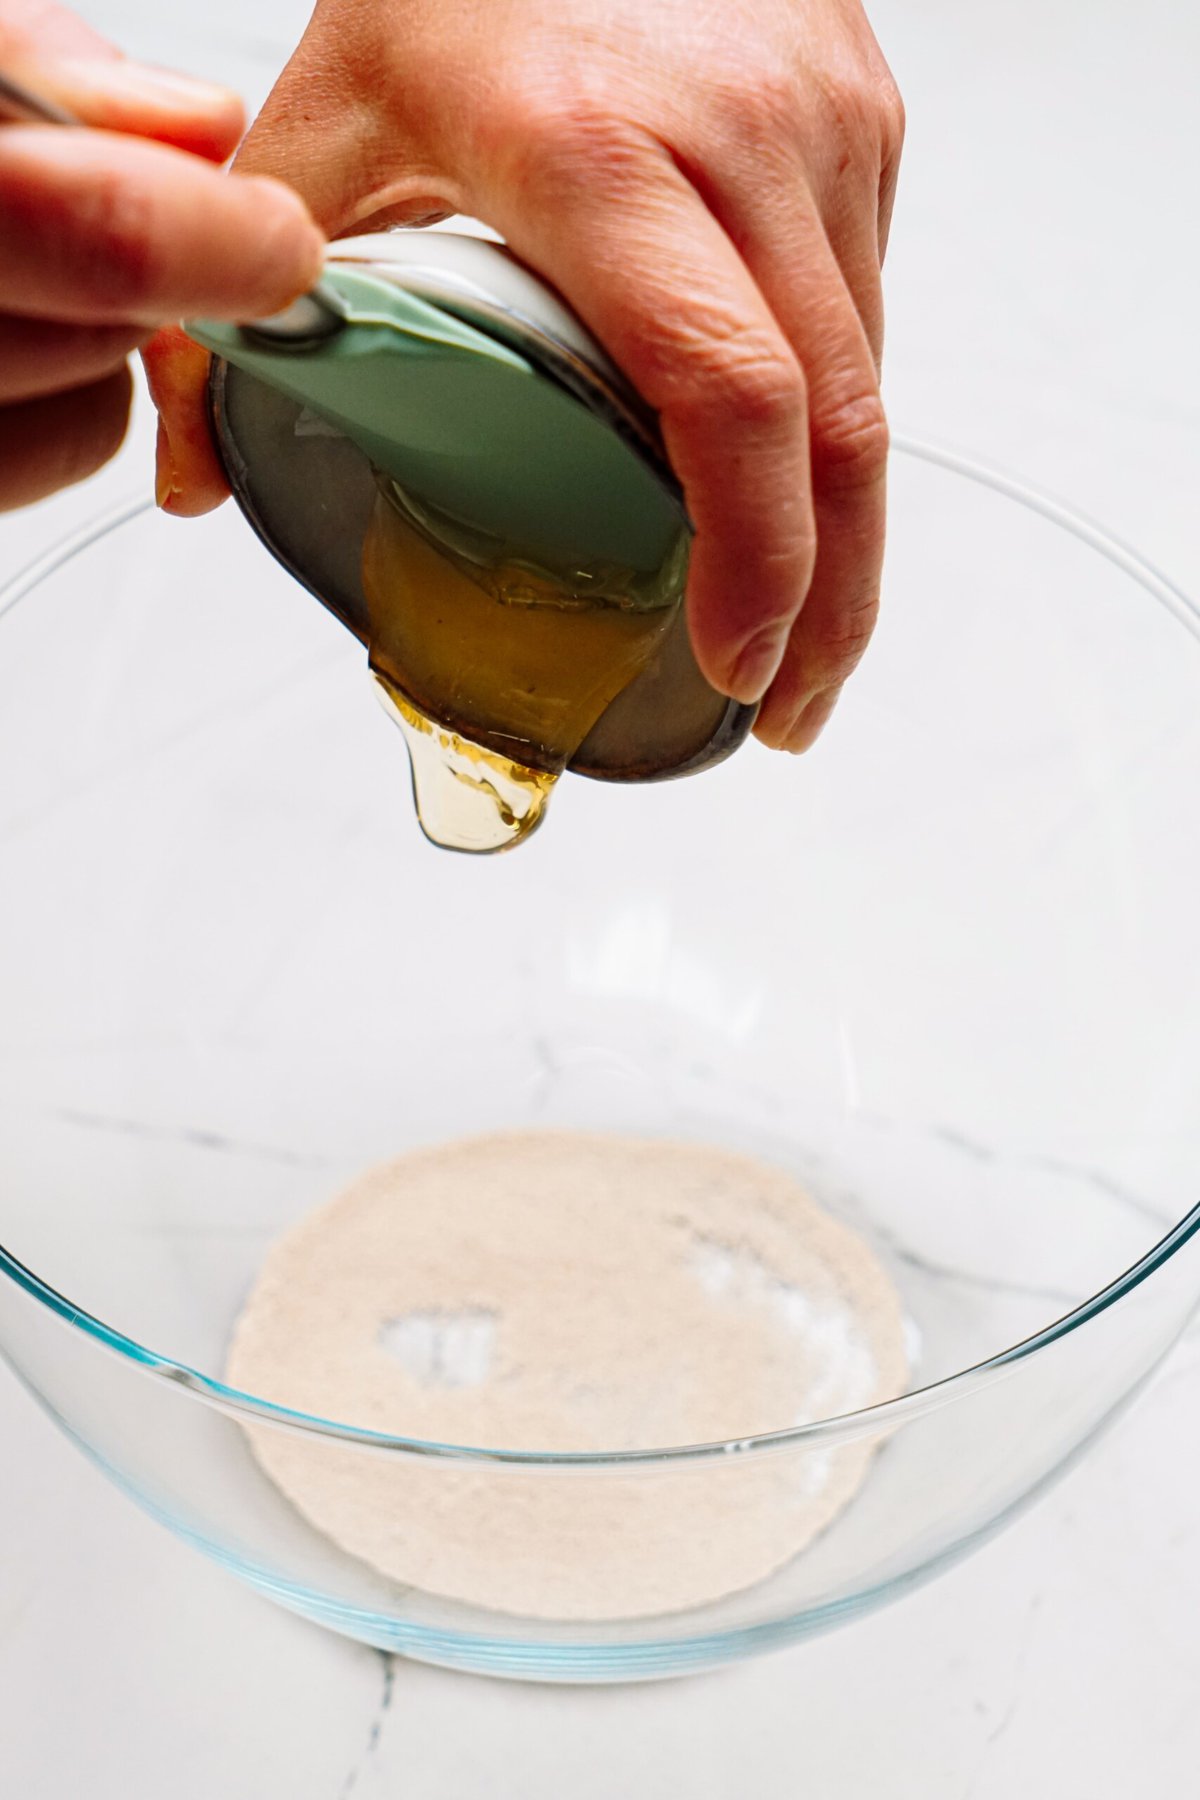 a person adding honey into a bowl